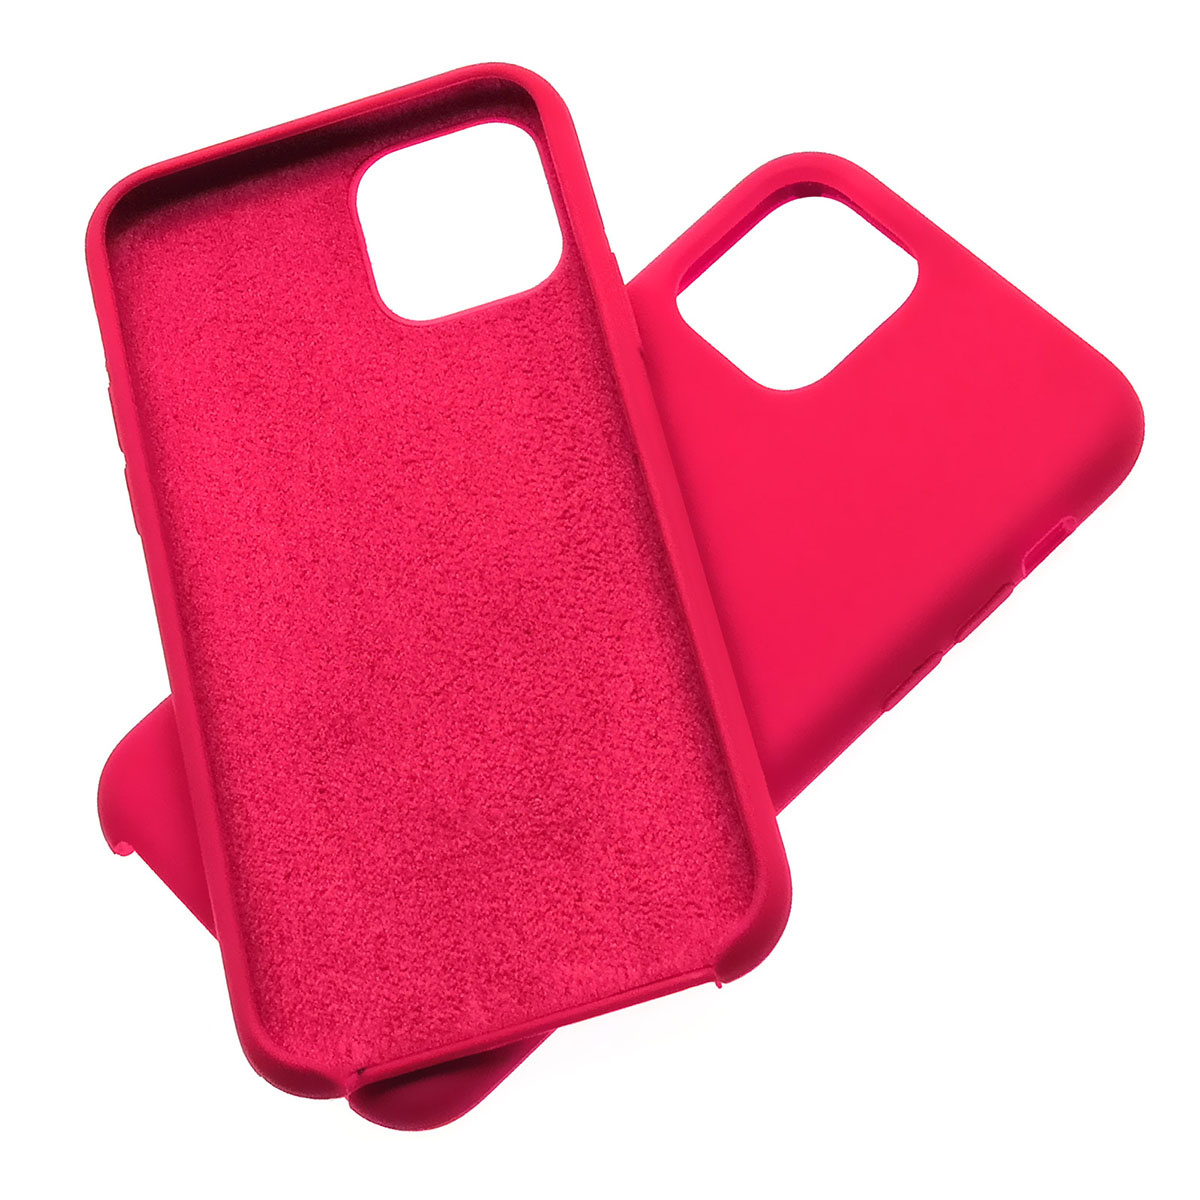 Чехол накладка Silicon Case для APPLE iPhone 11 Pro, силикон, бархат, цвет фуксия.